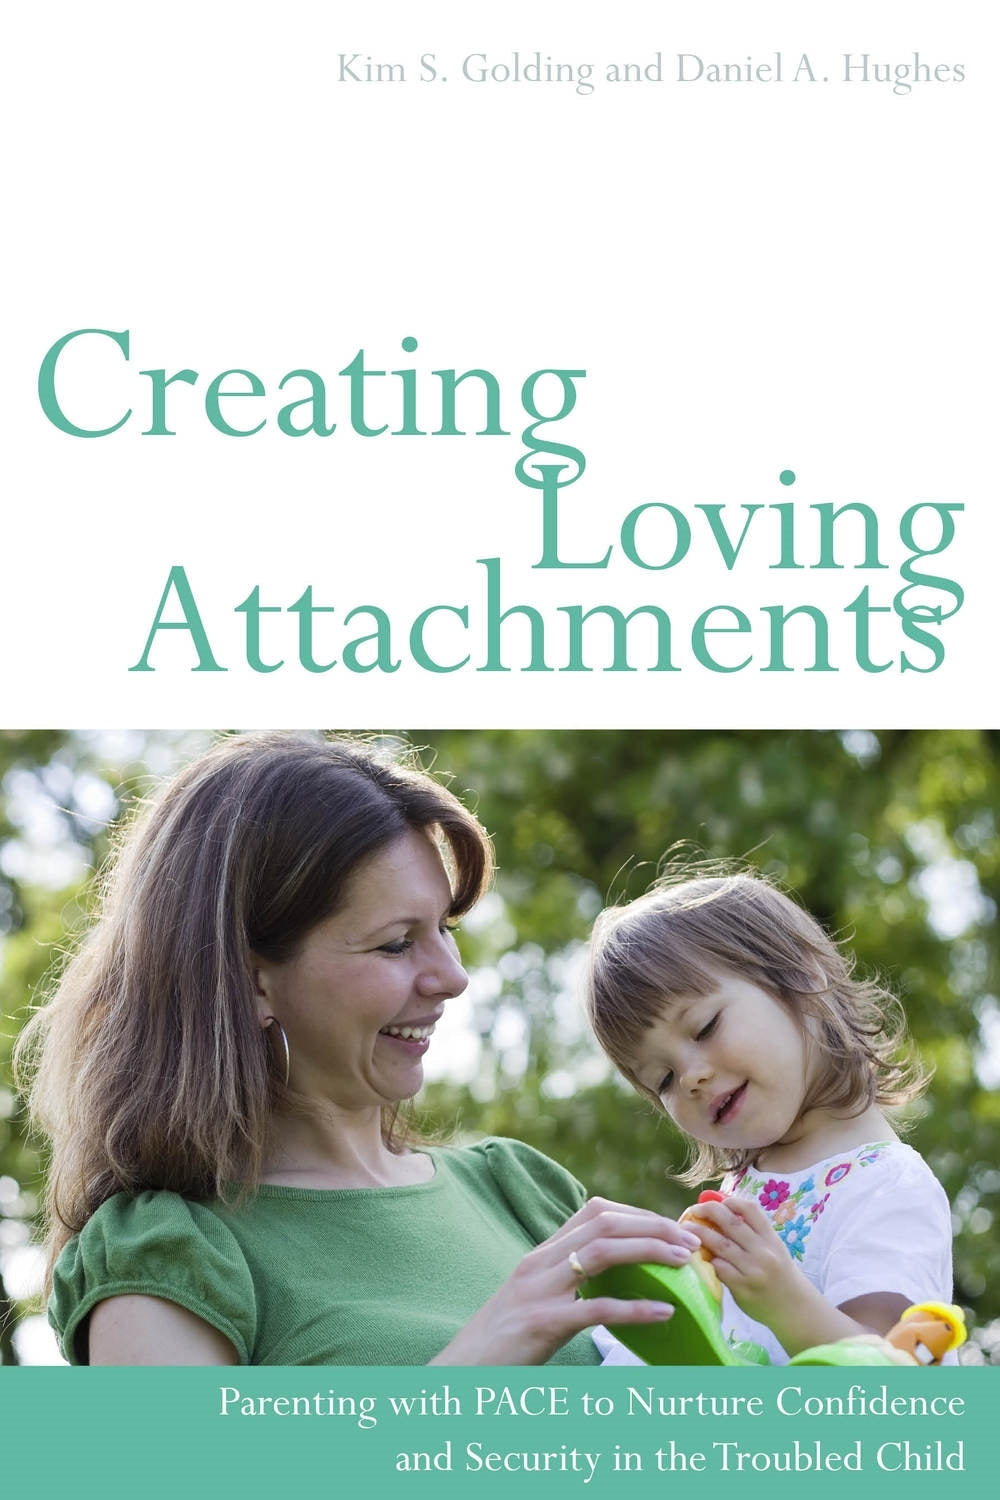 Creating Loving Attachments by Daniel Hughes, Kim S. Golding